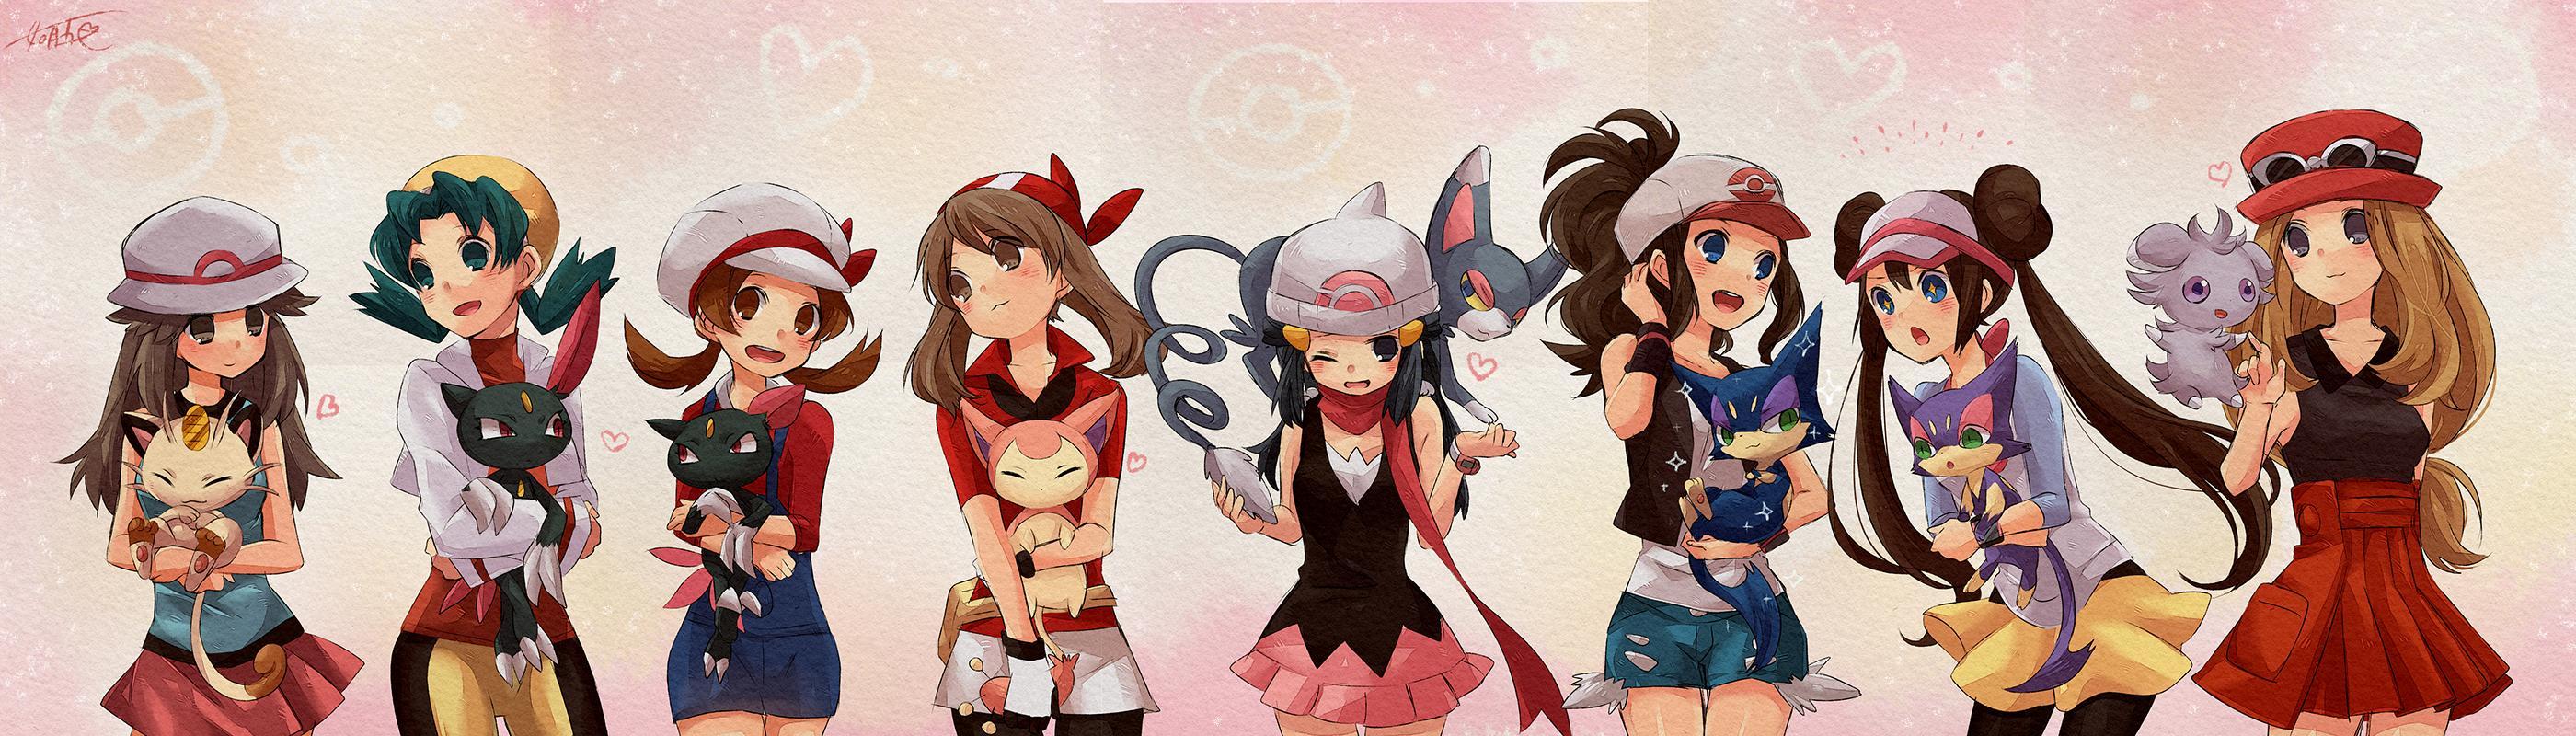 Pokemon Girls Wallpapers